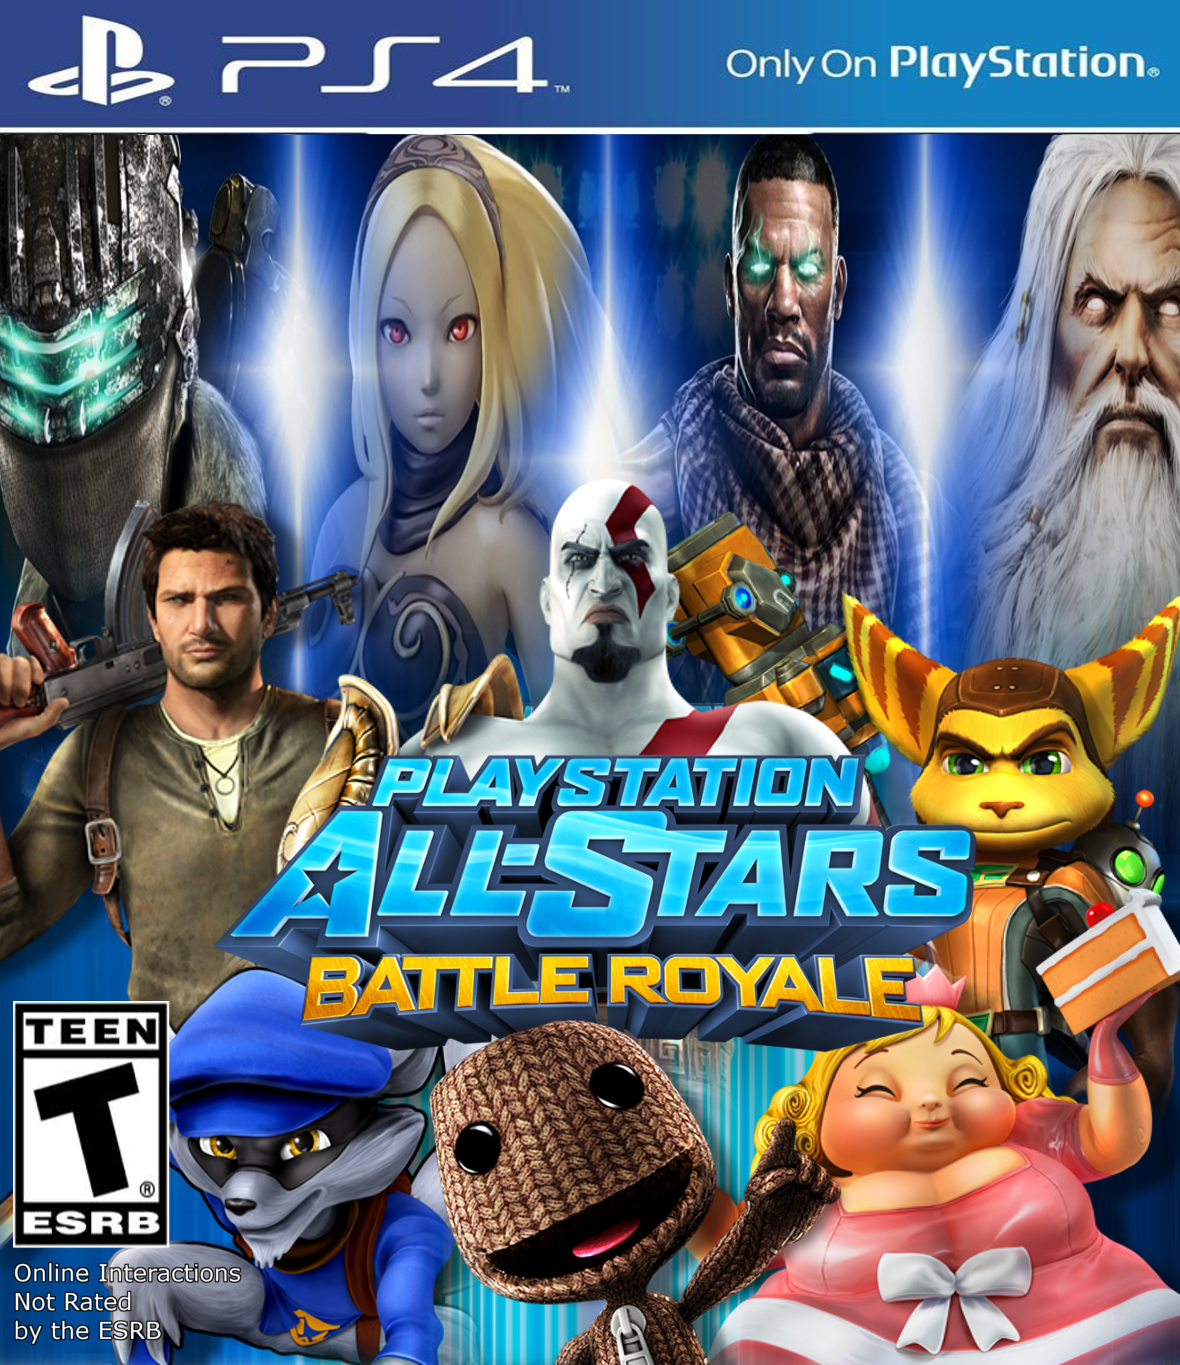 Comprar PlayStation All-Stars Battle Royale - Ps3 Mídia Digital